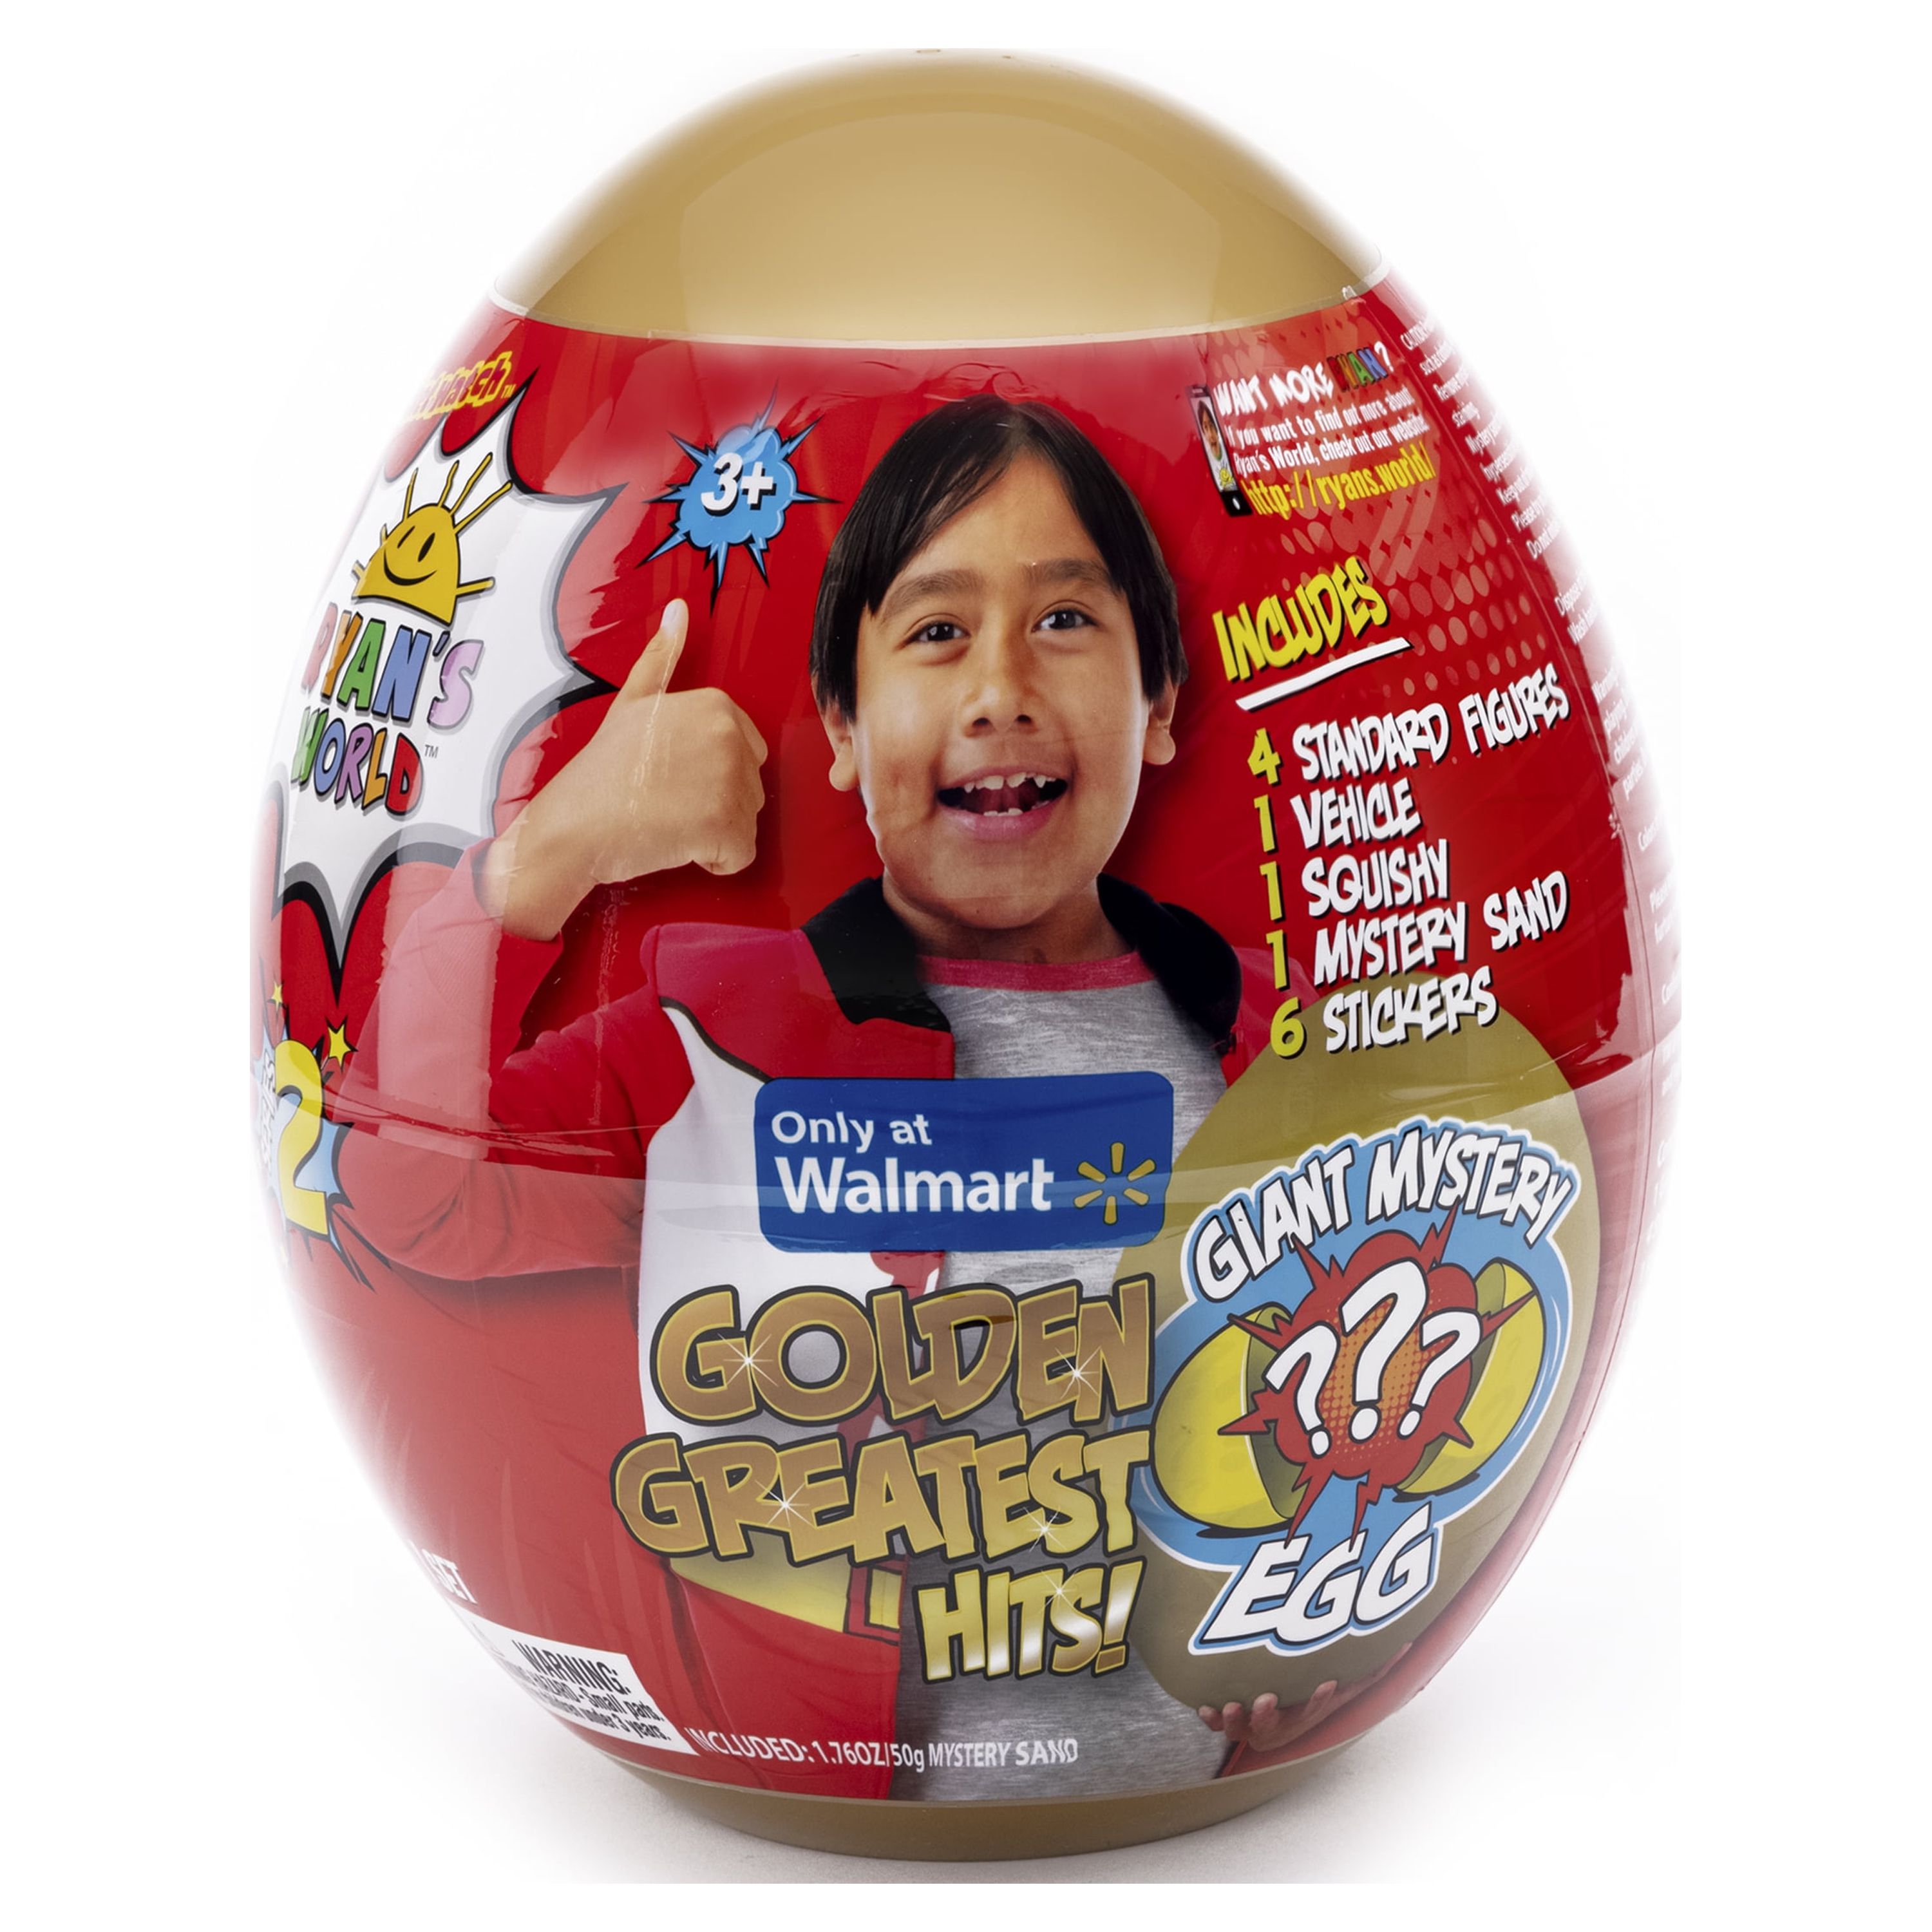 Ryans World Golden Giant Mystery Egg - Walmart Exclusive - image 2 of 6